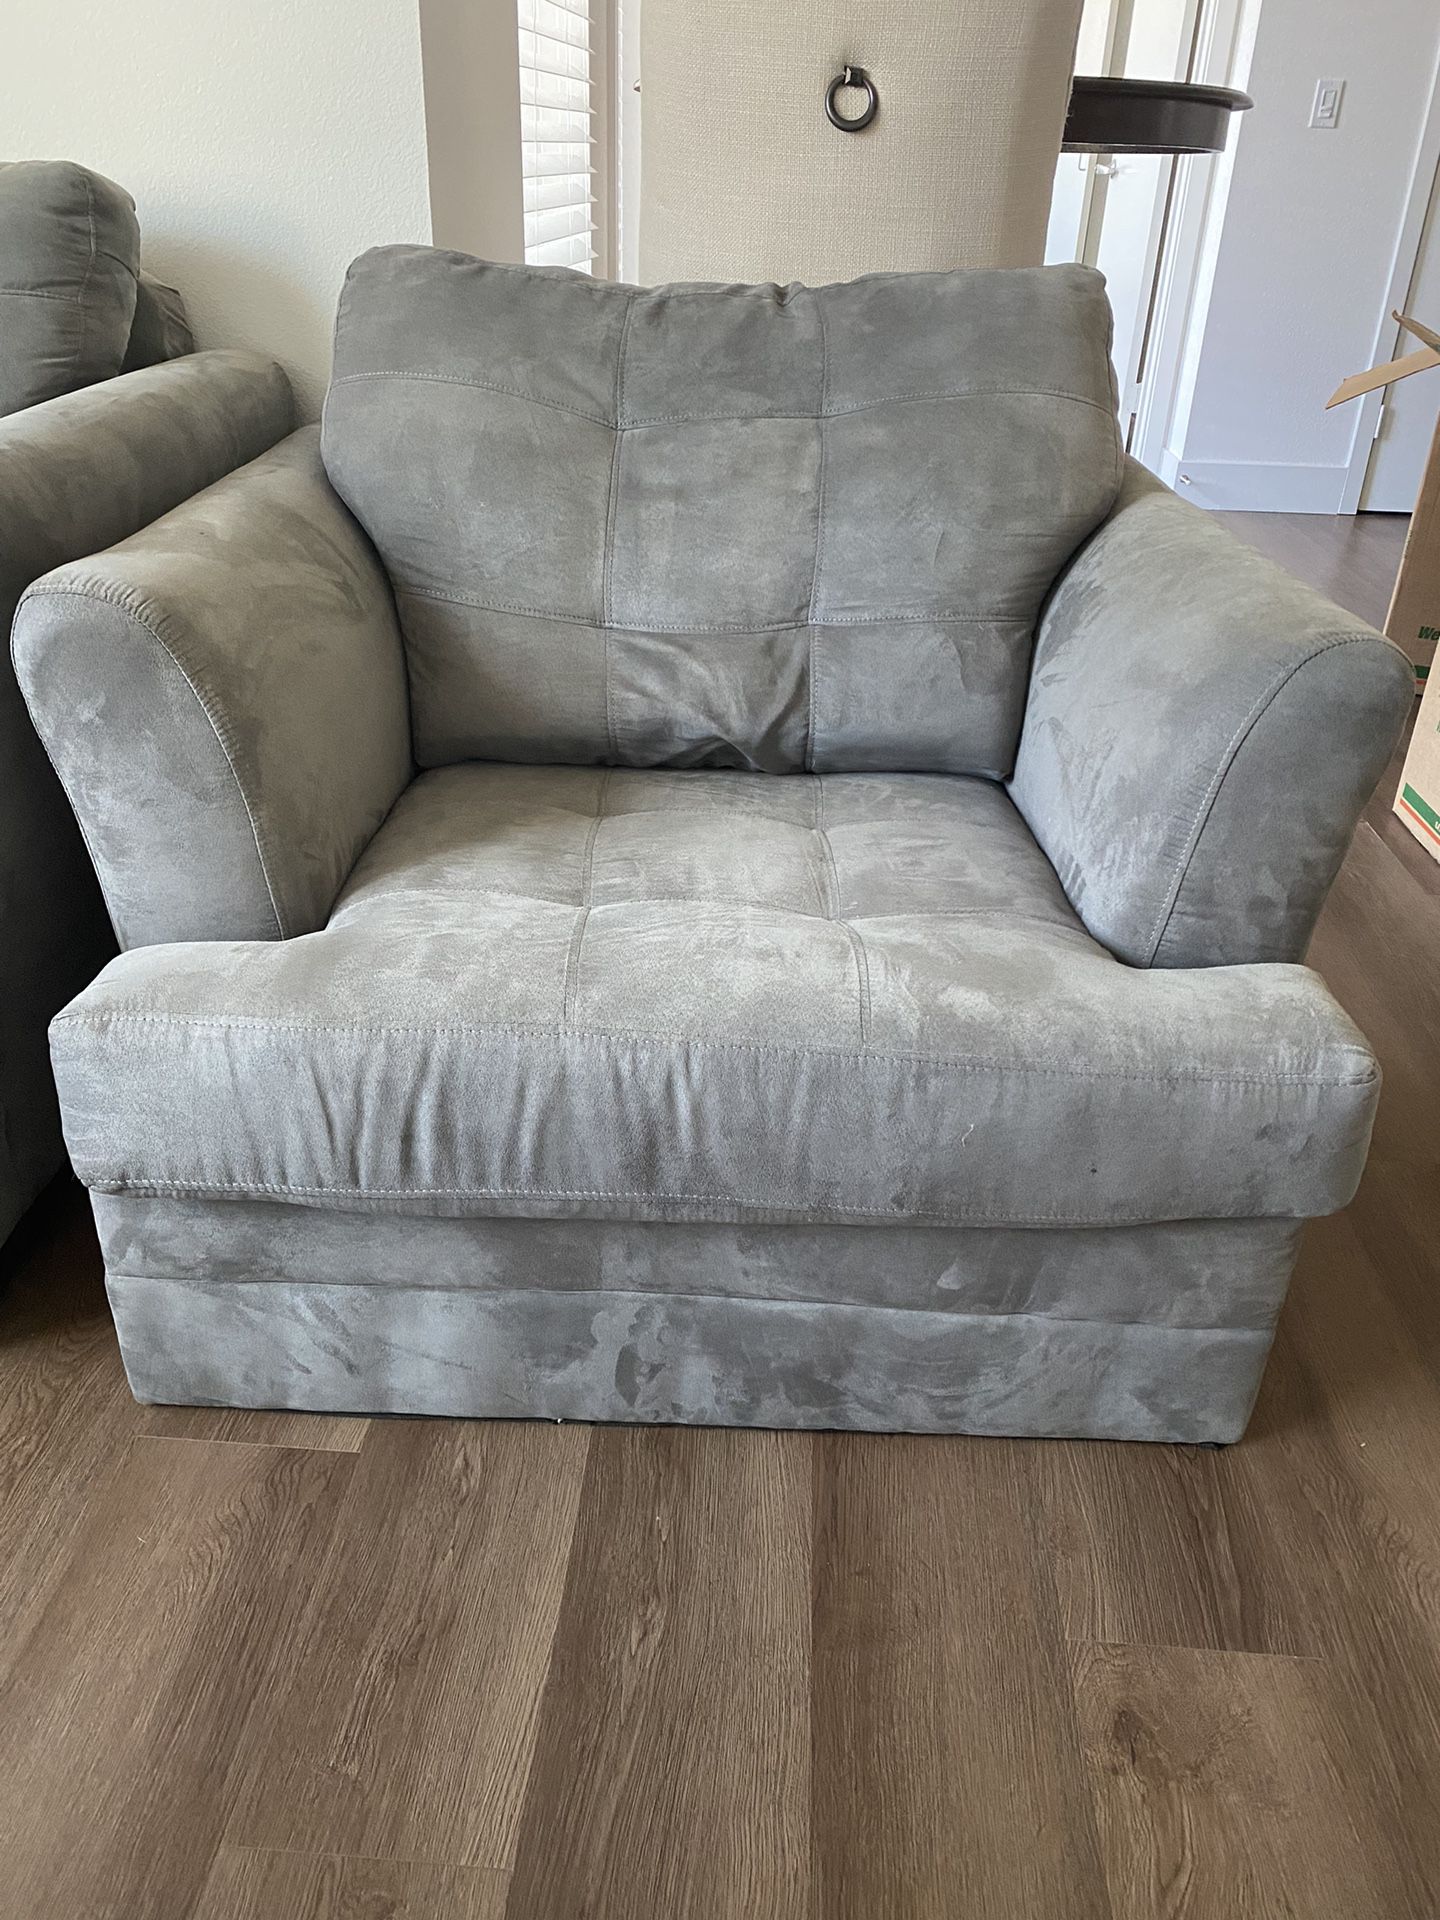 FREE Single Sofa